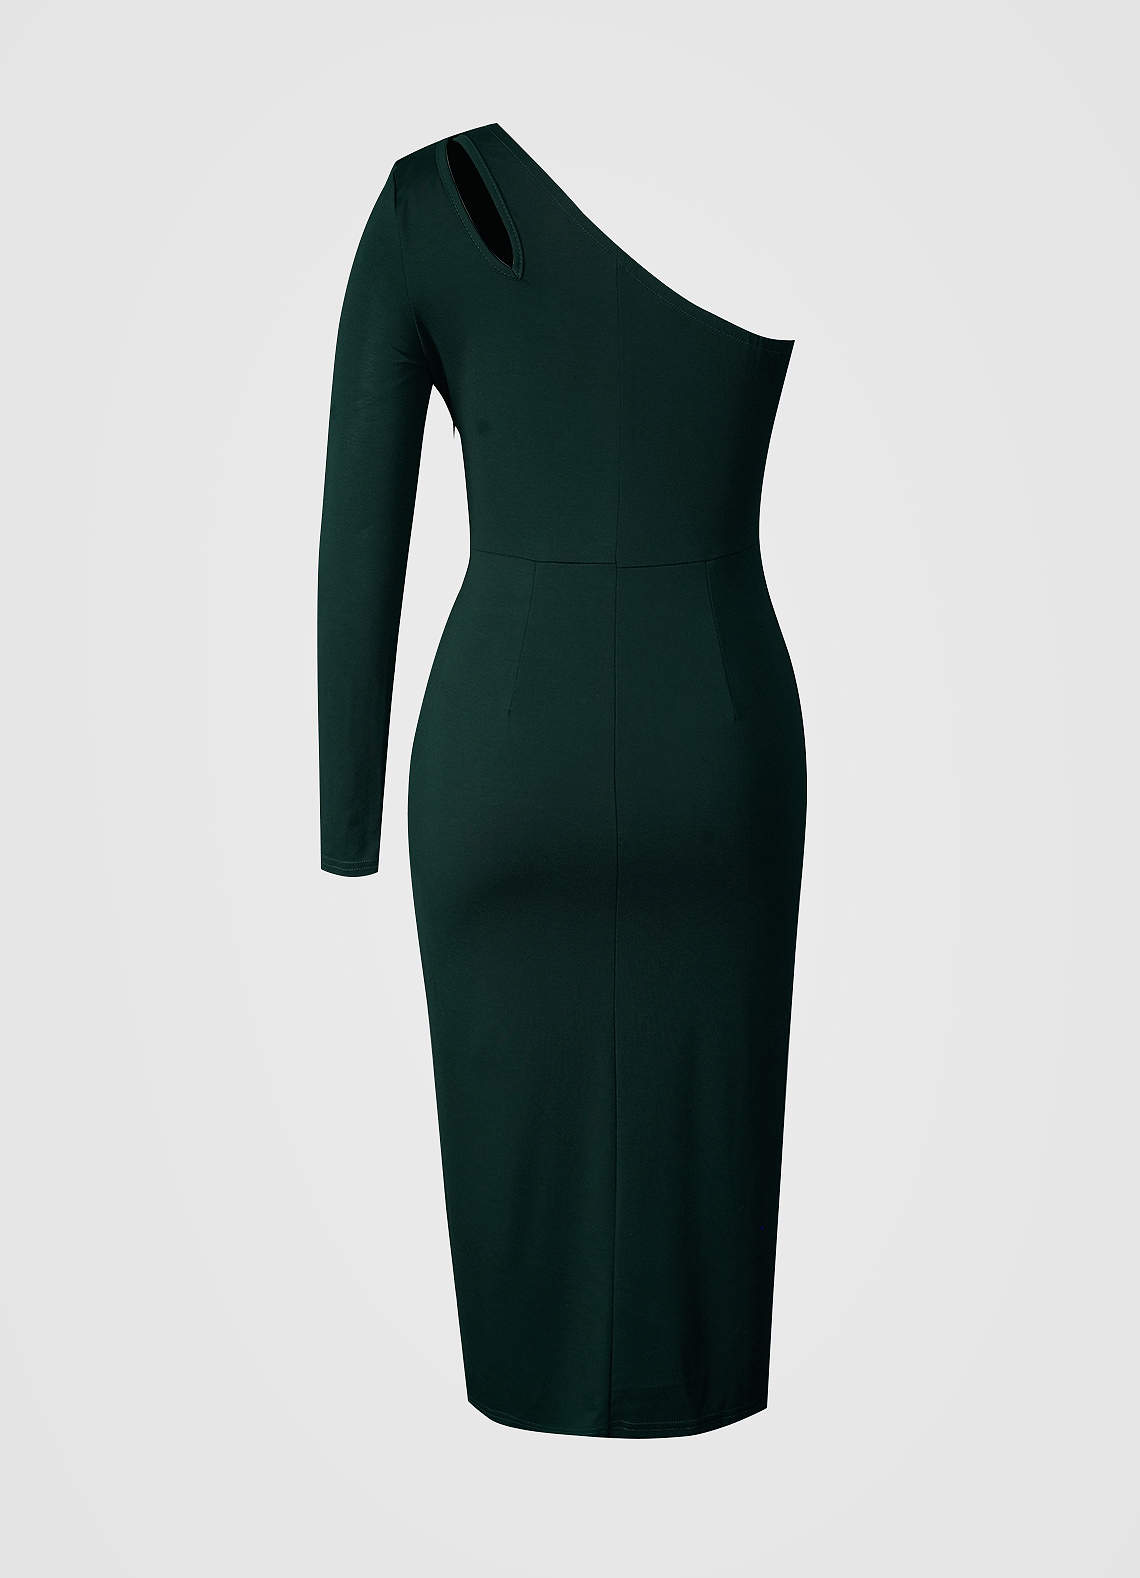 Alluring Image Dark Emerald One Shoulder Tulip Dress image1